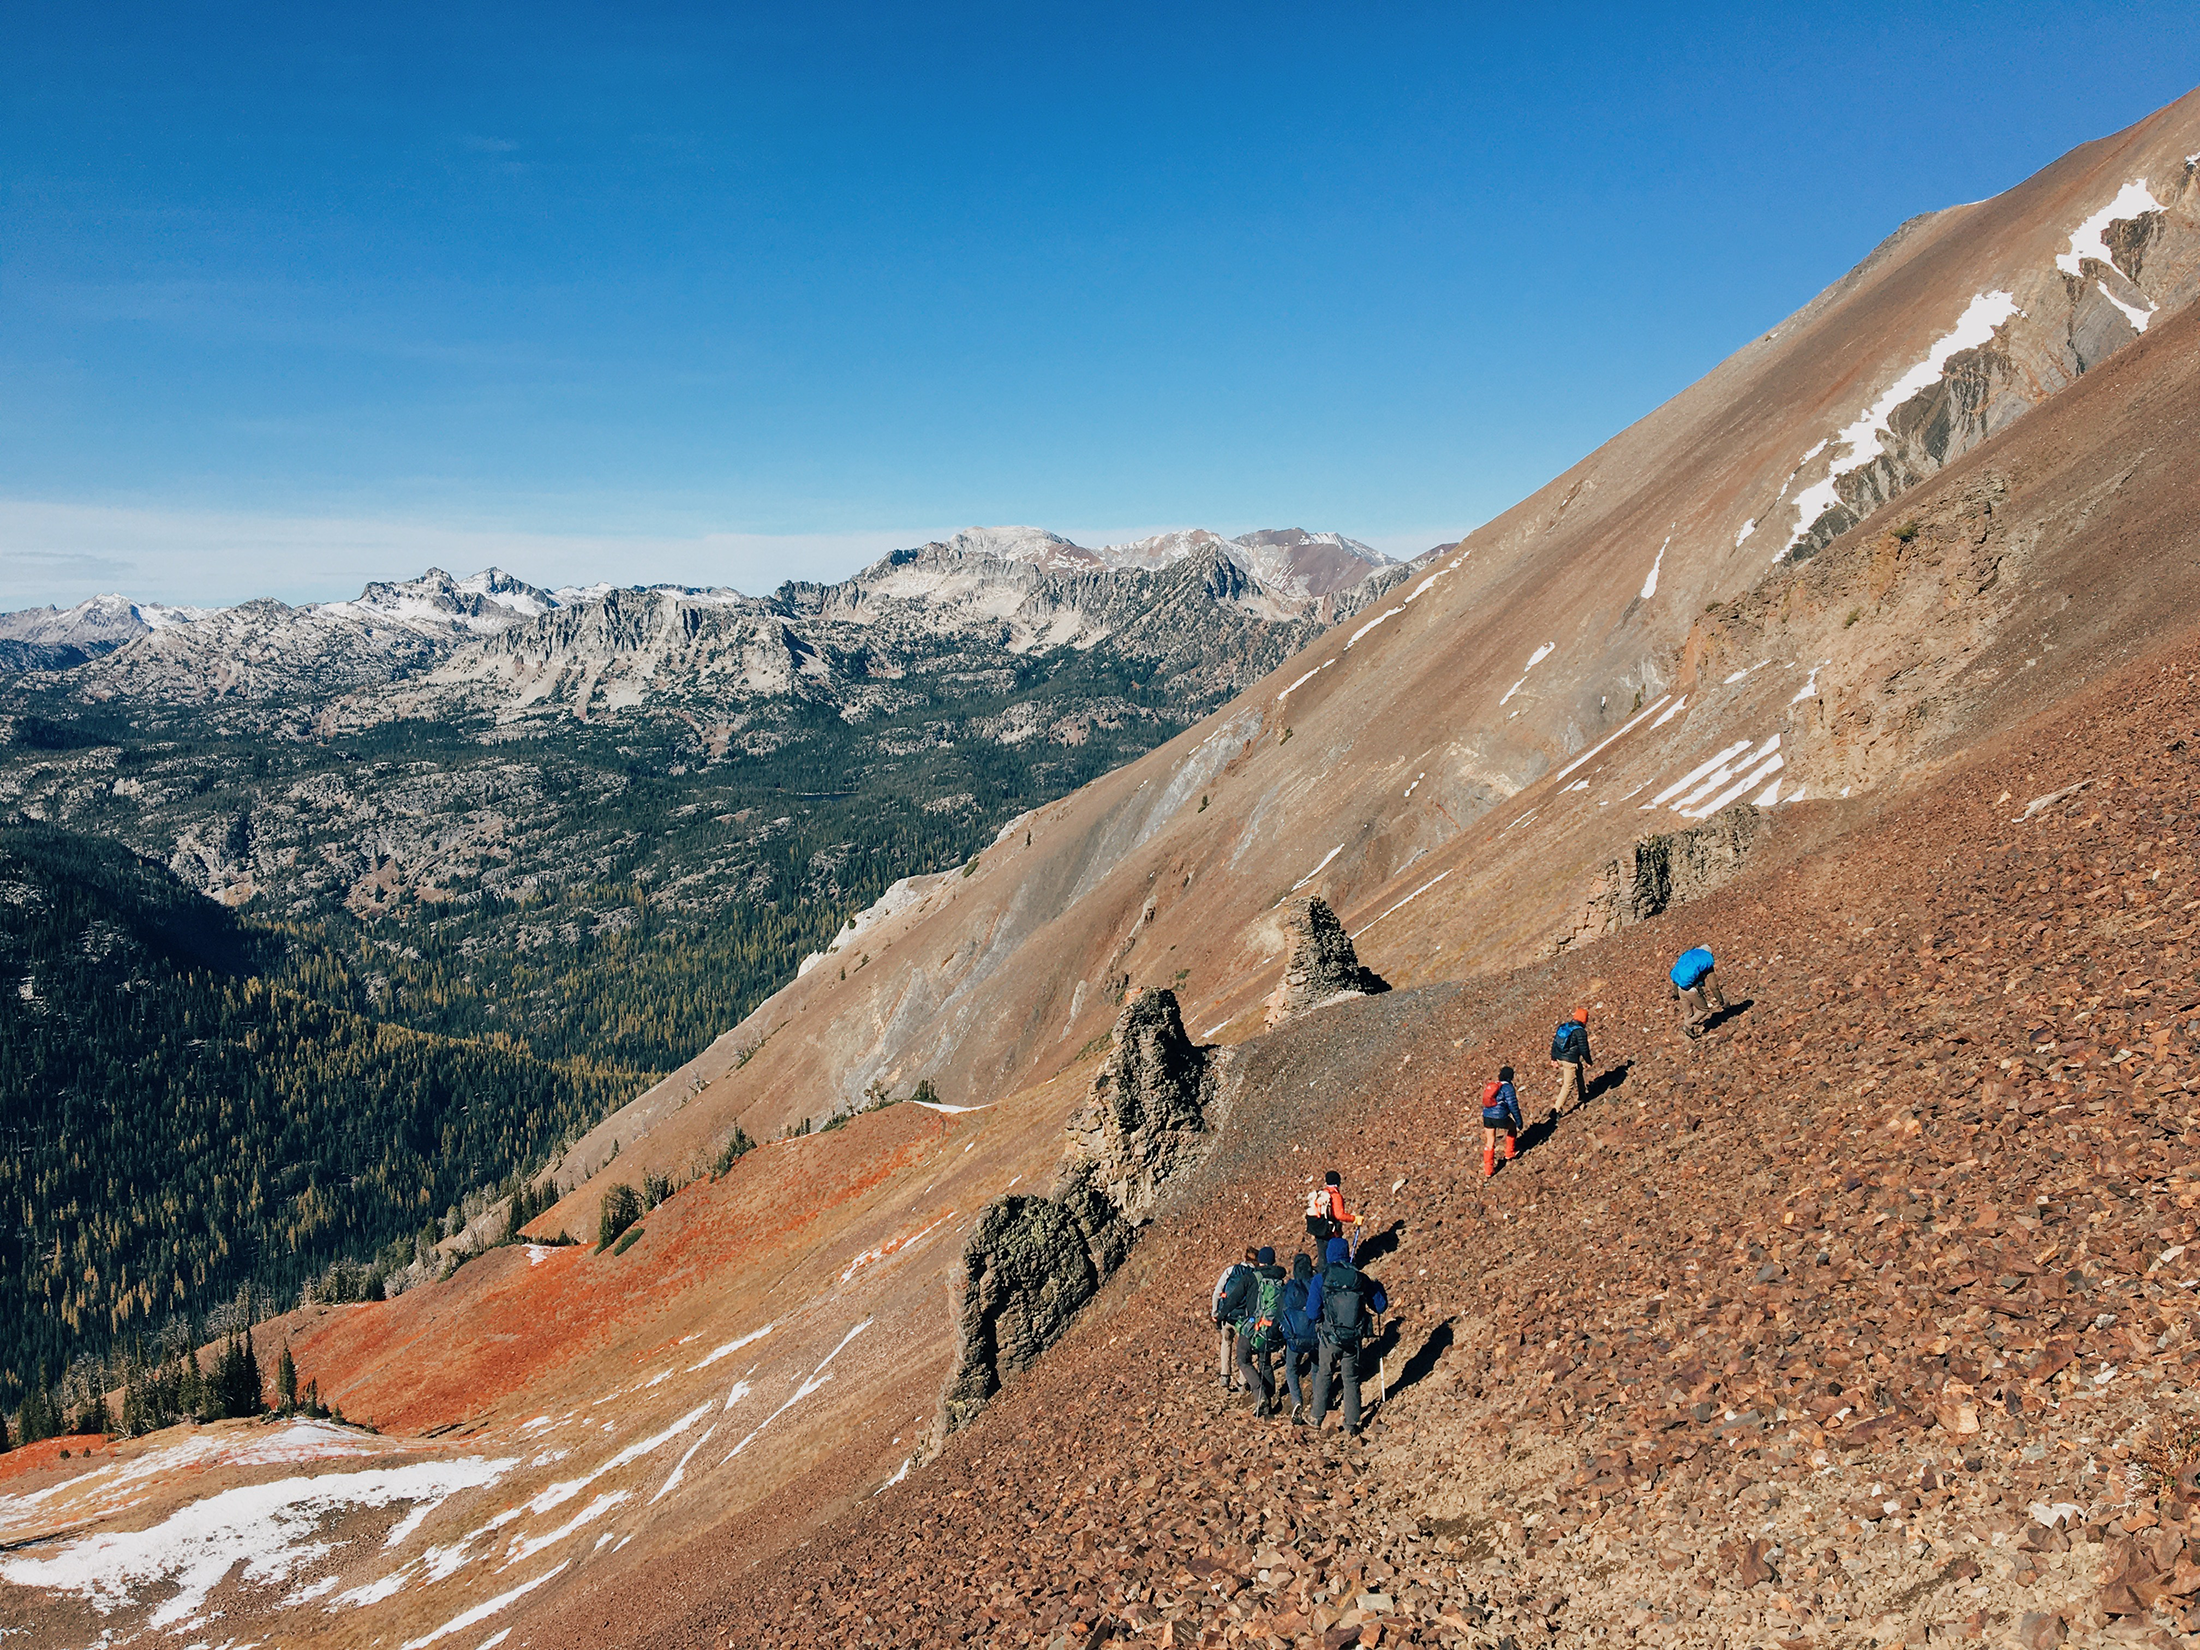 Group of people trekking across a rocky mountainside.